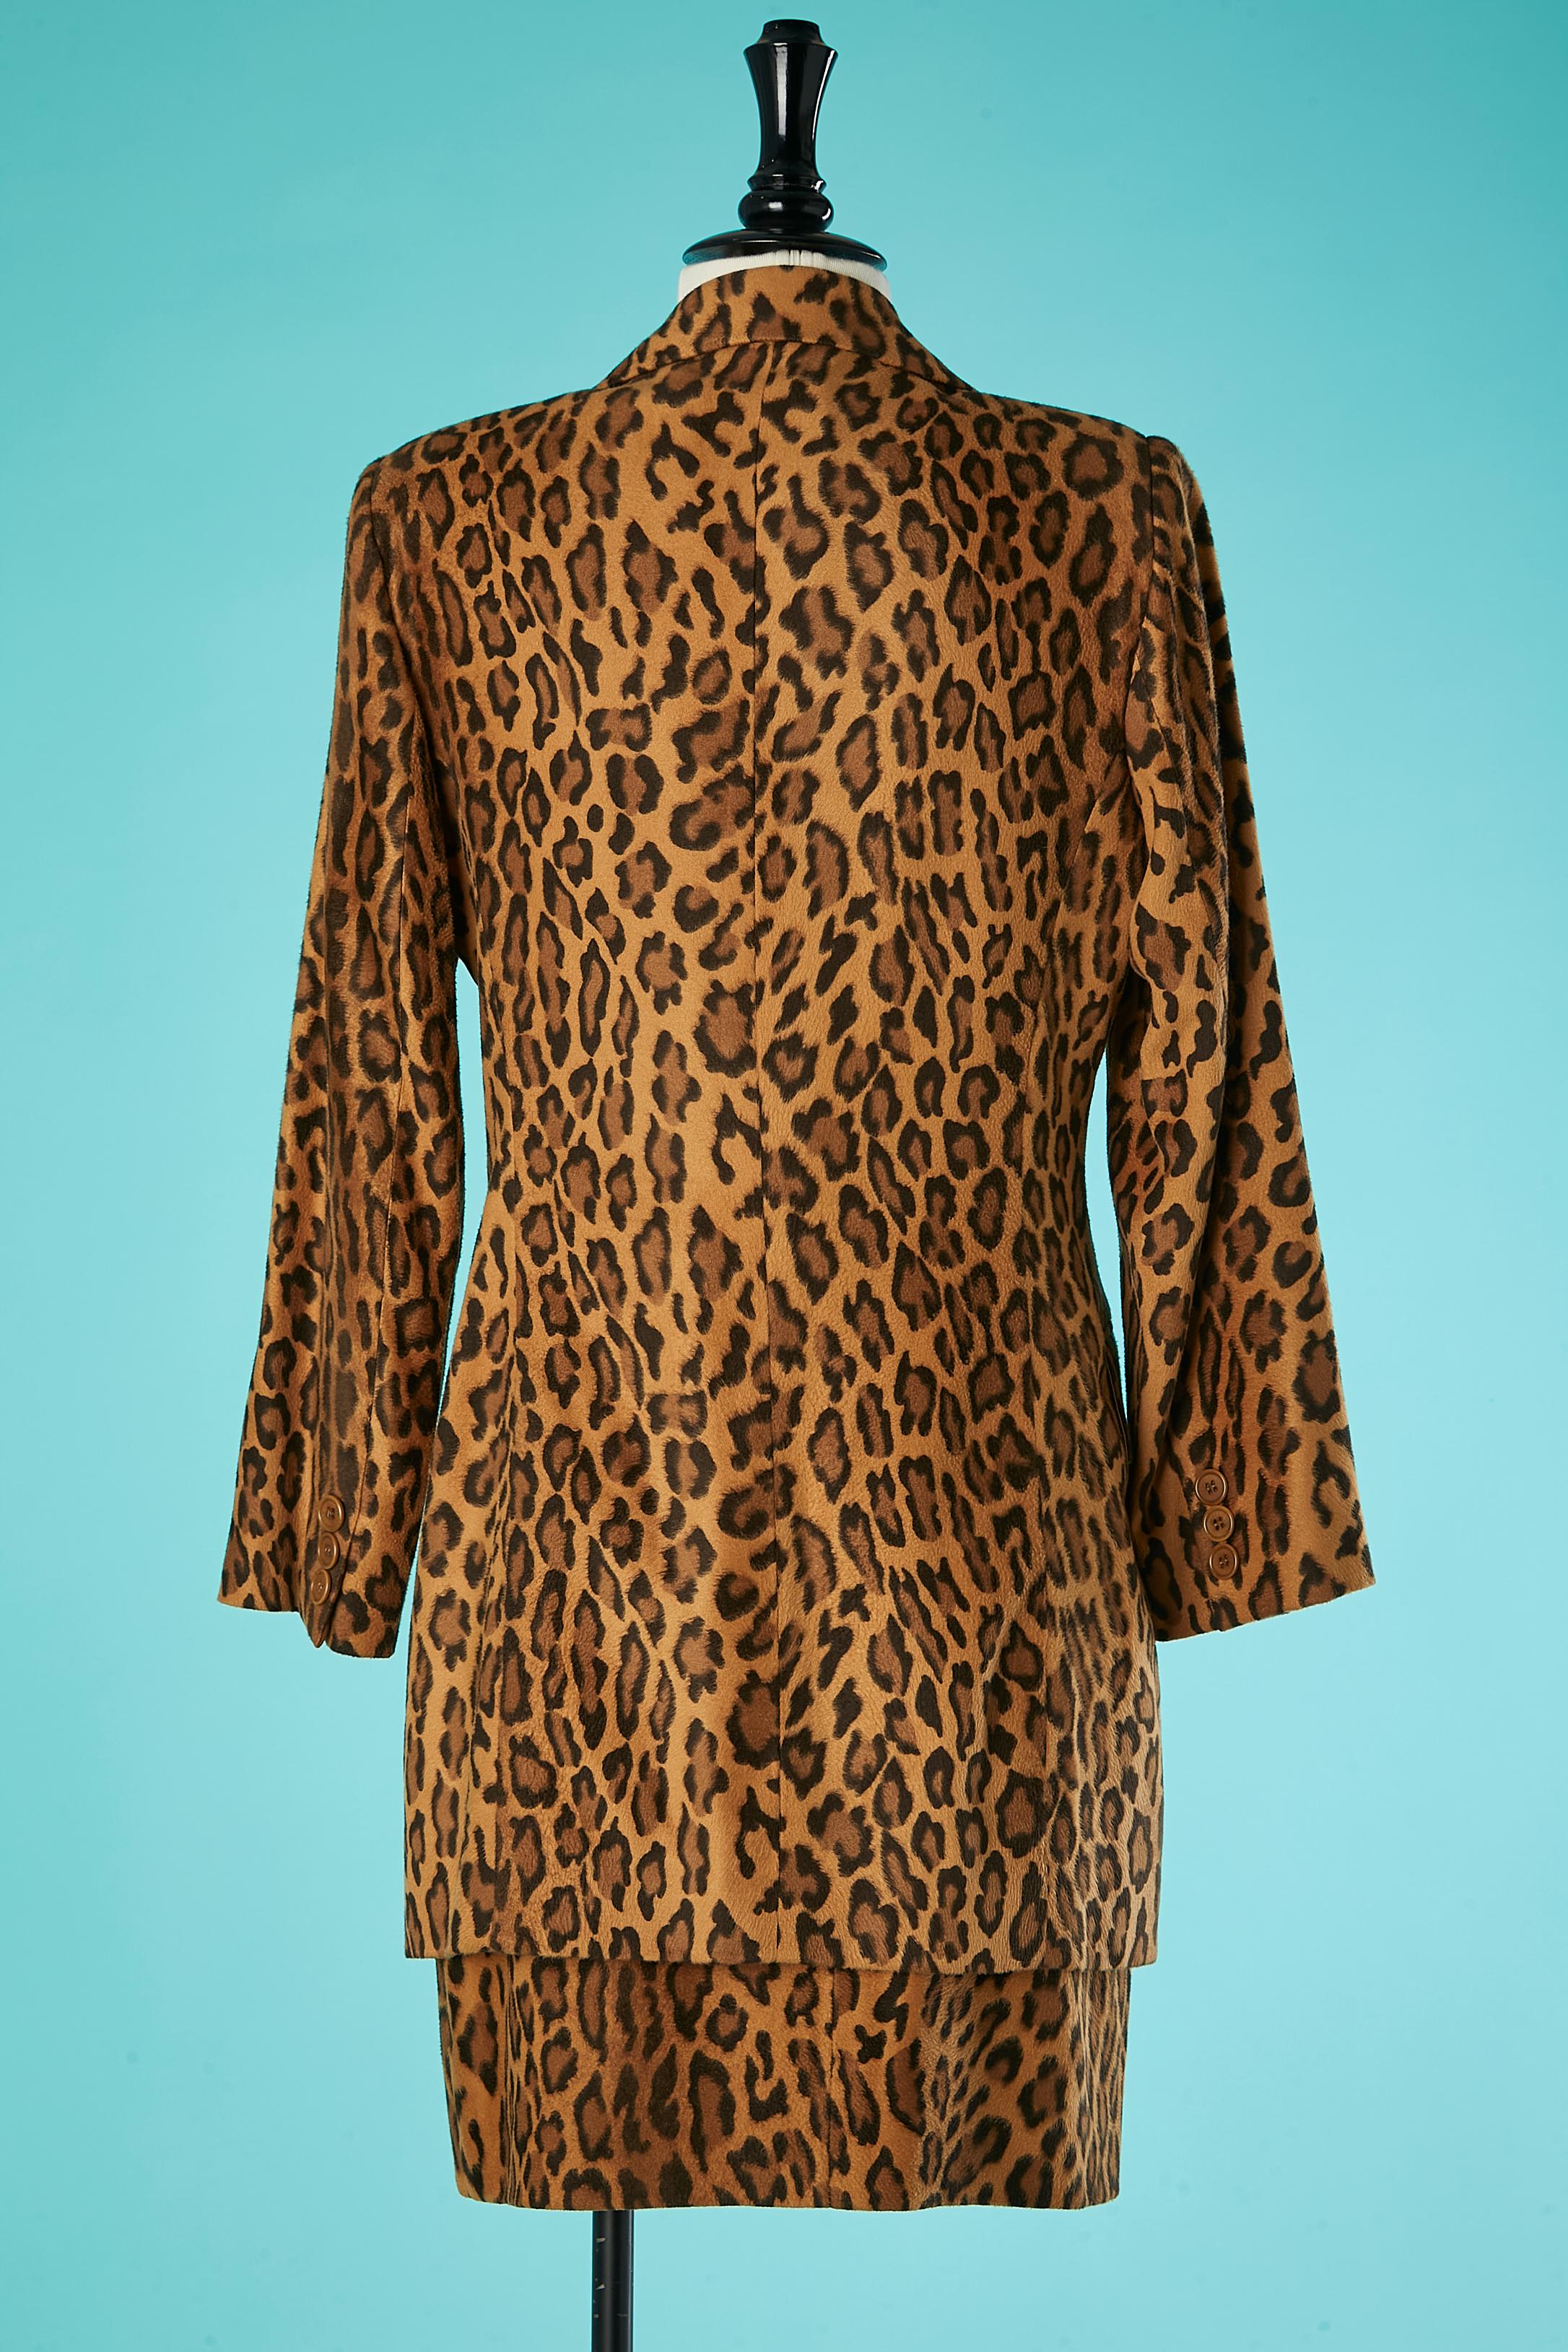 Coat and skirt ensemble with leopard print GFF Gianfranco Ferré  For Sale 1